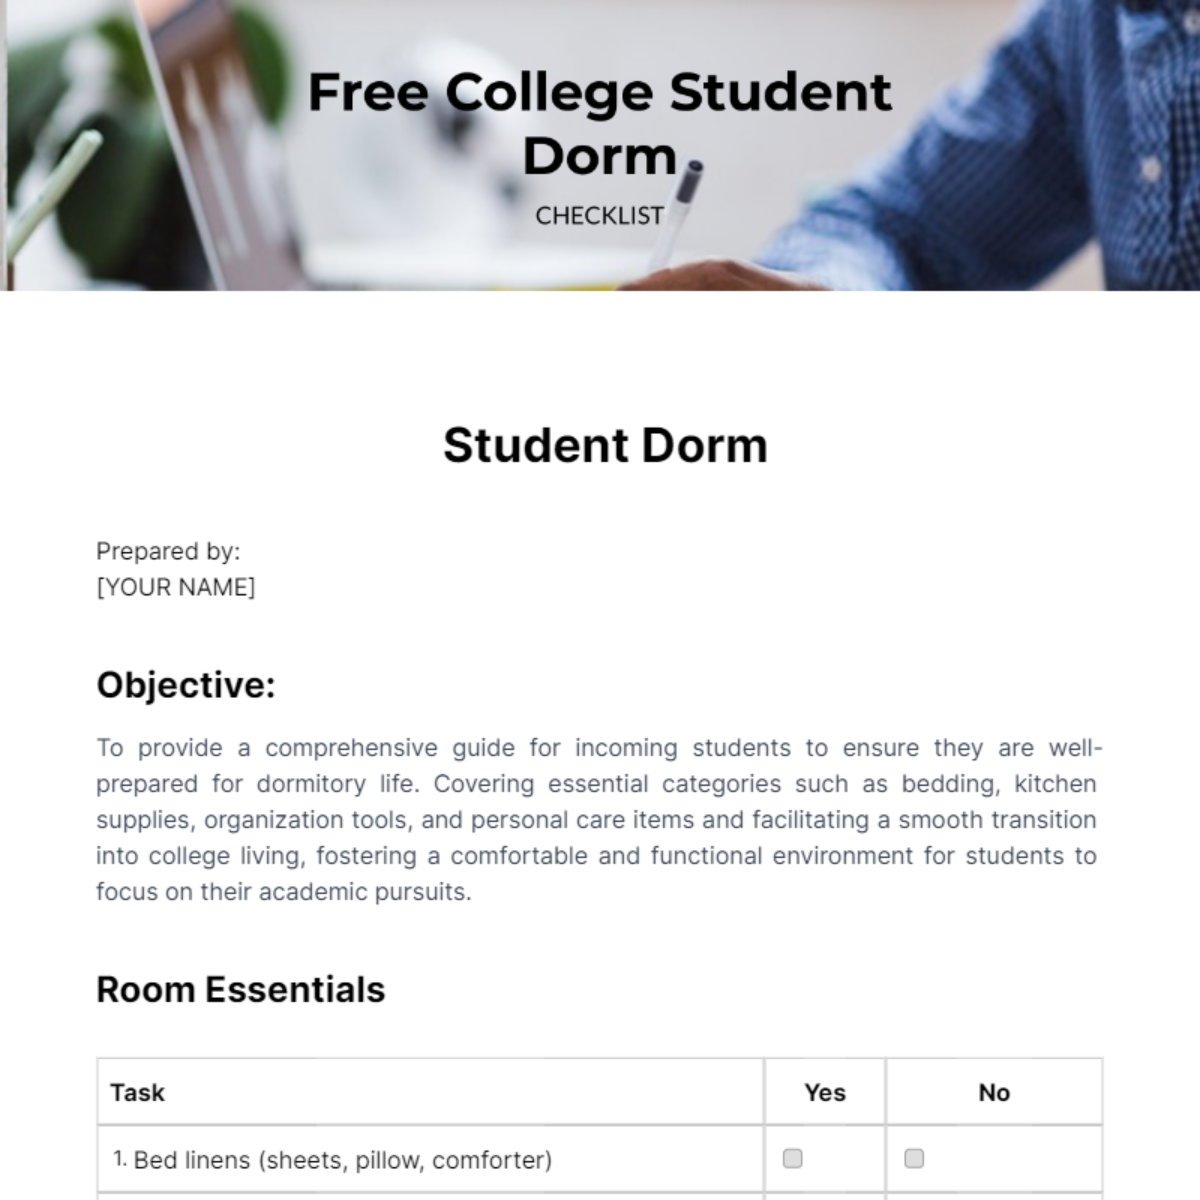 Free College Student Dorm Checklist Template